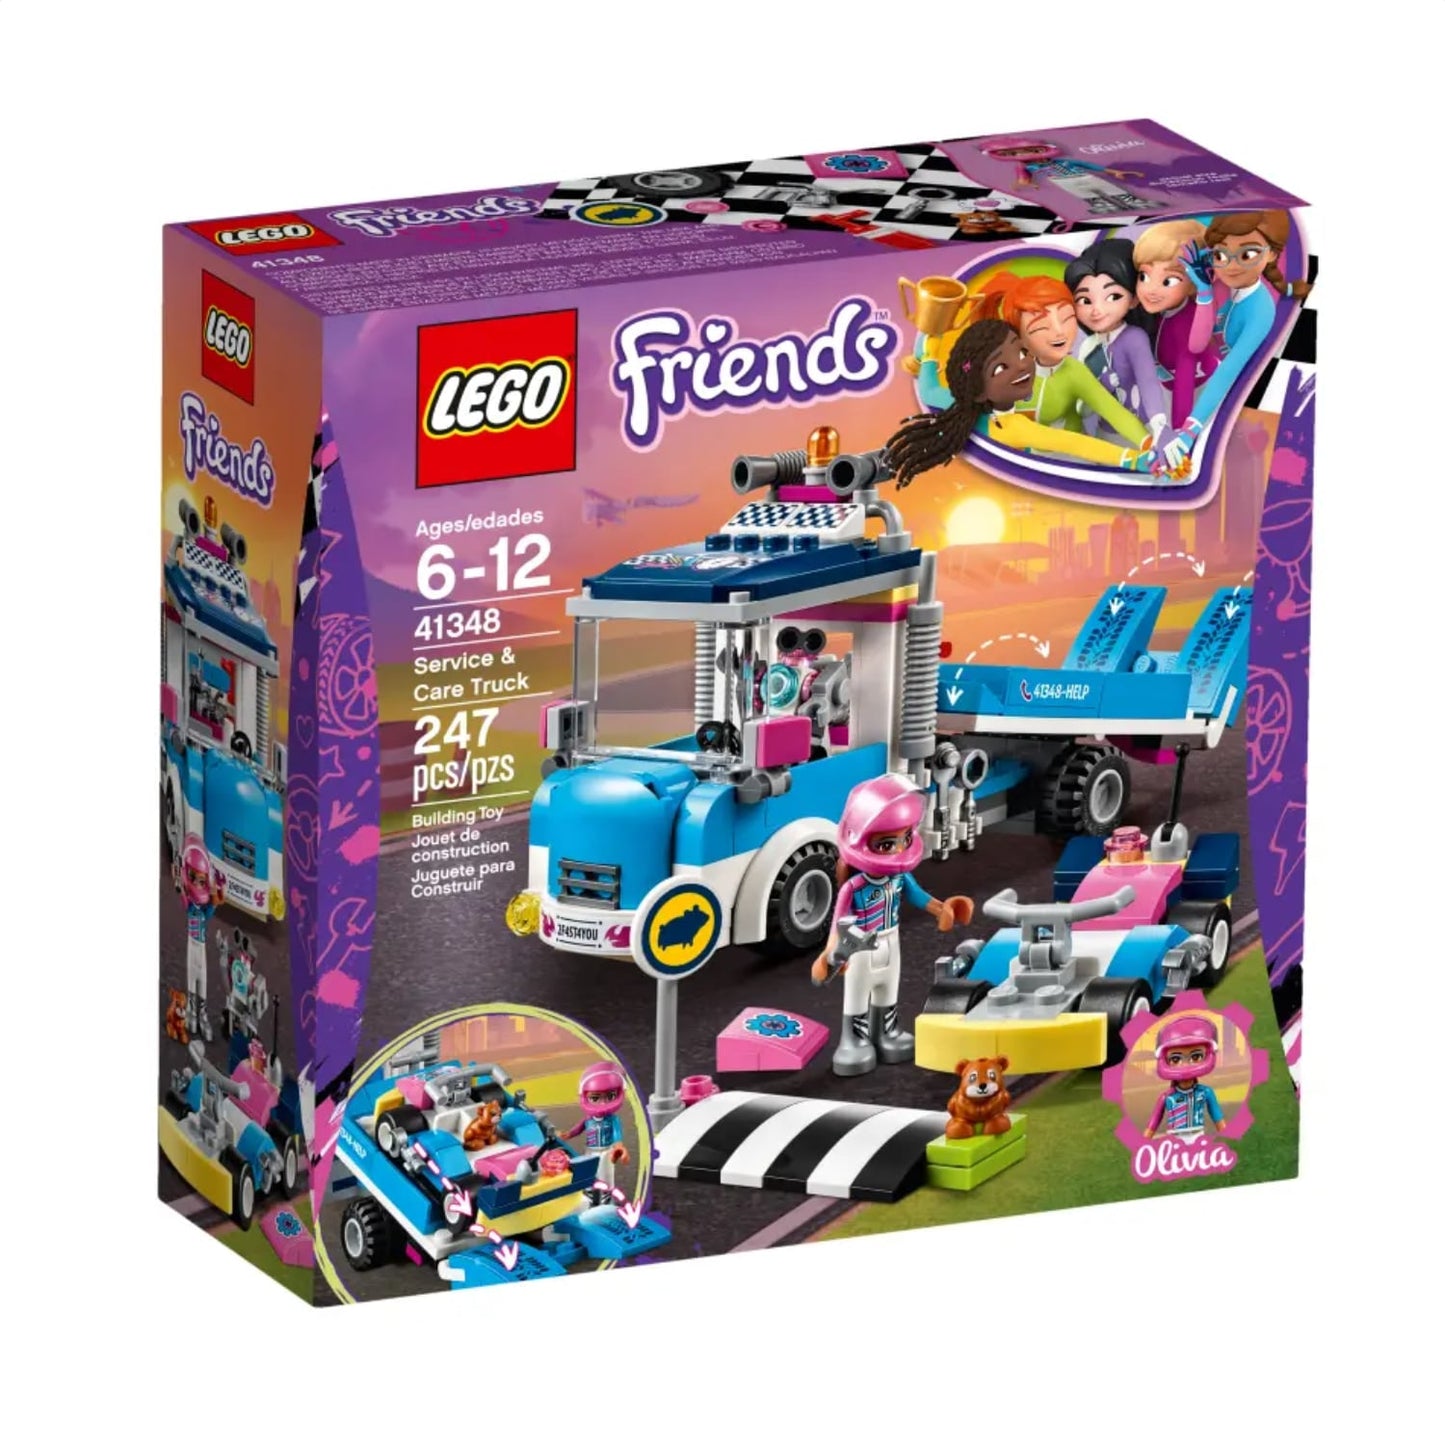 Lego 41348 Friends Service & Care Truck